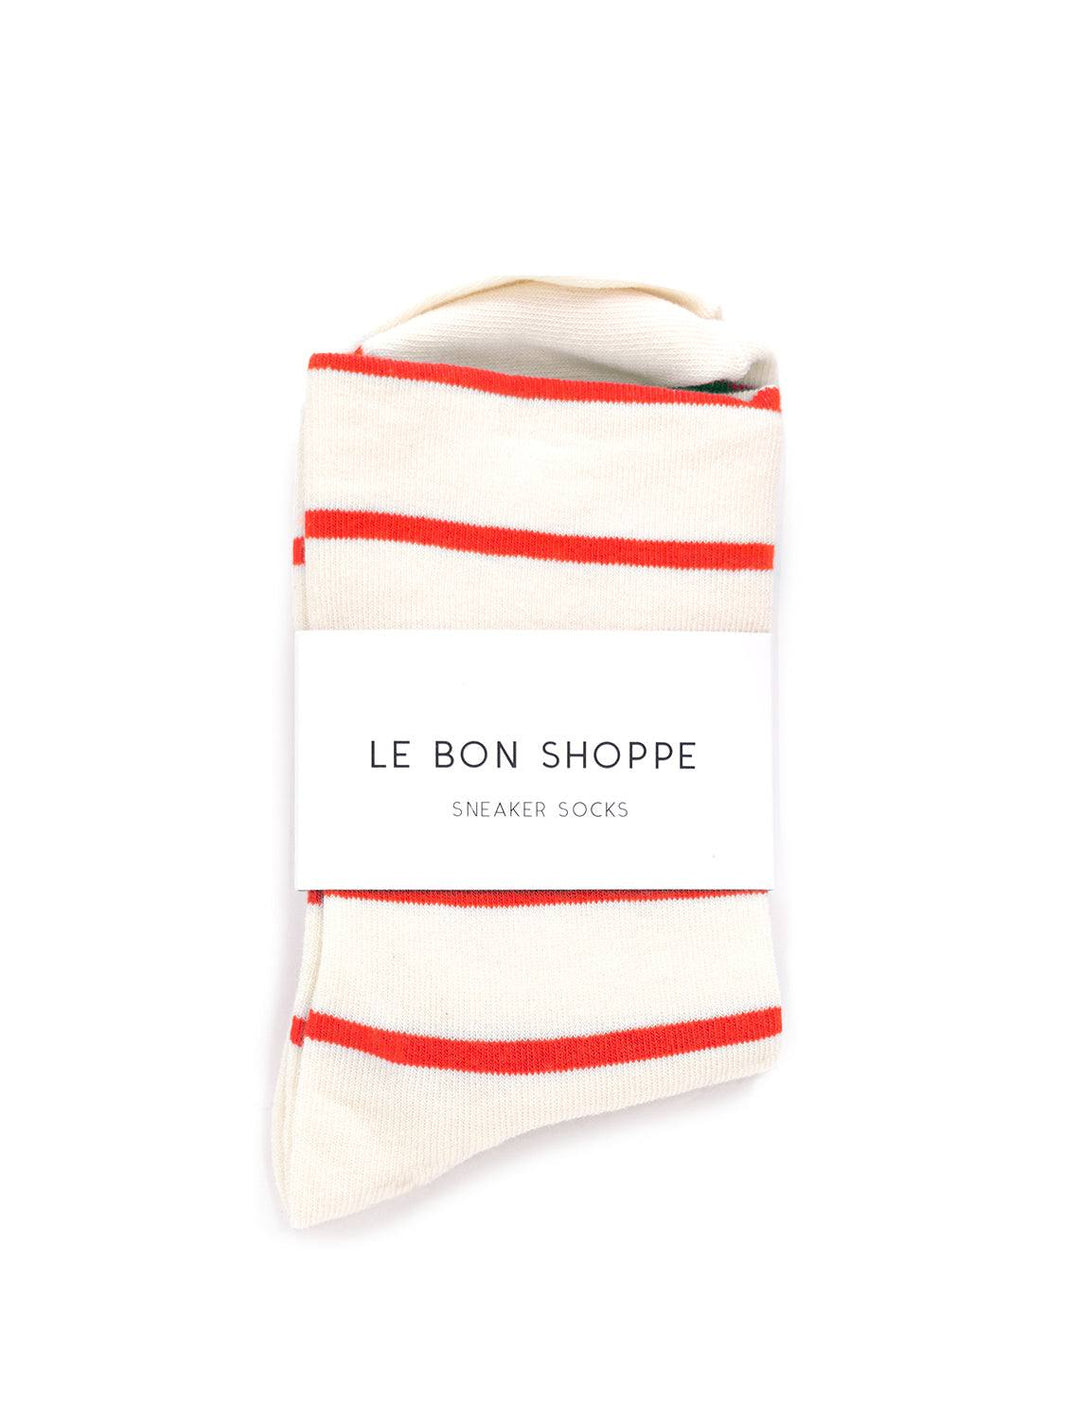 Le Bon Shoppe's wally socks in candy cane